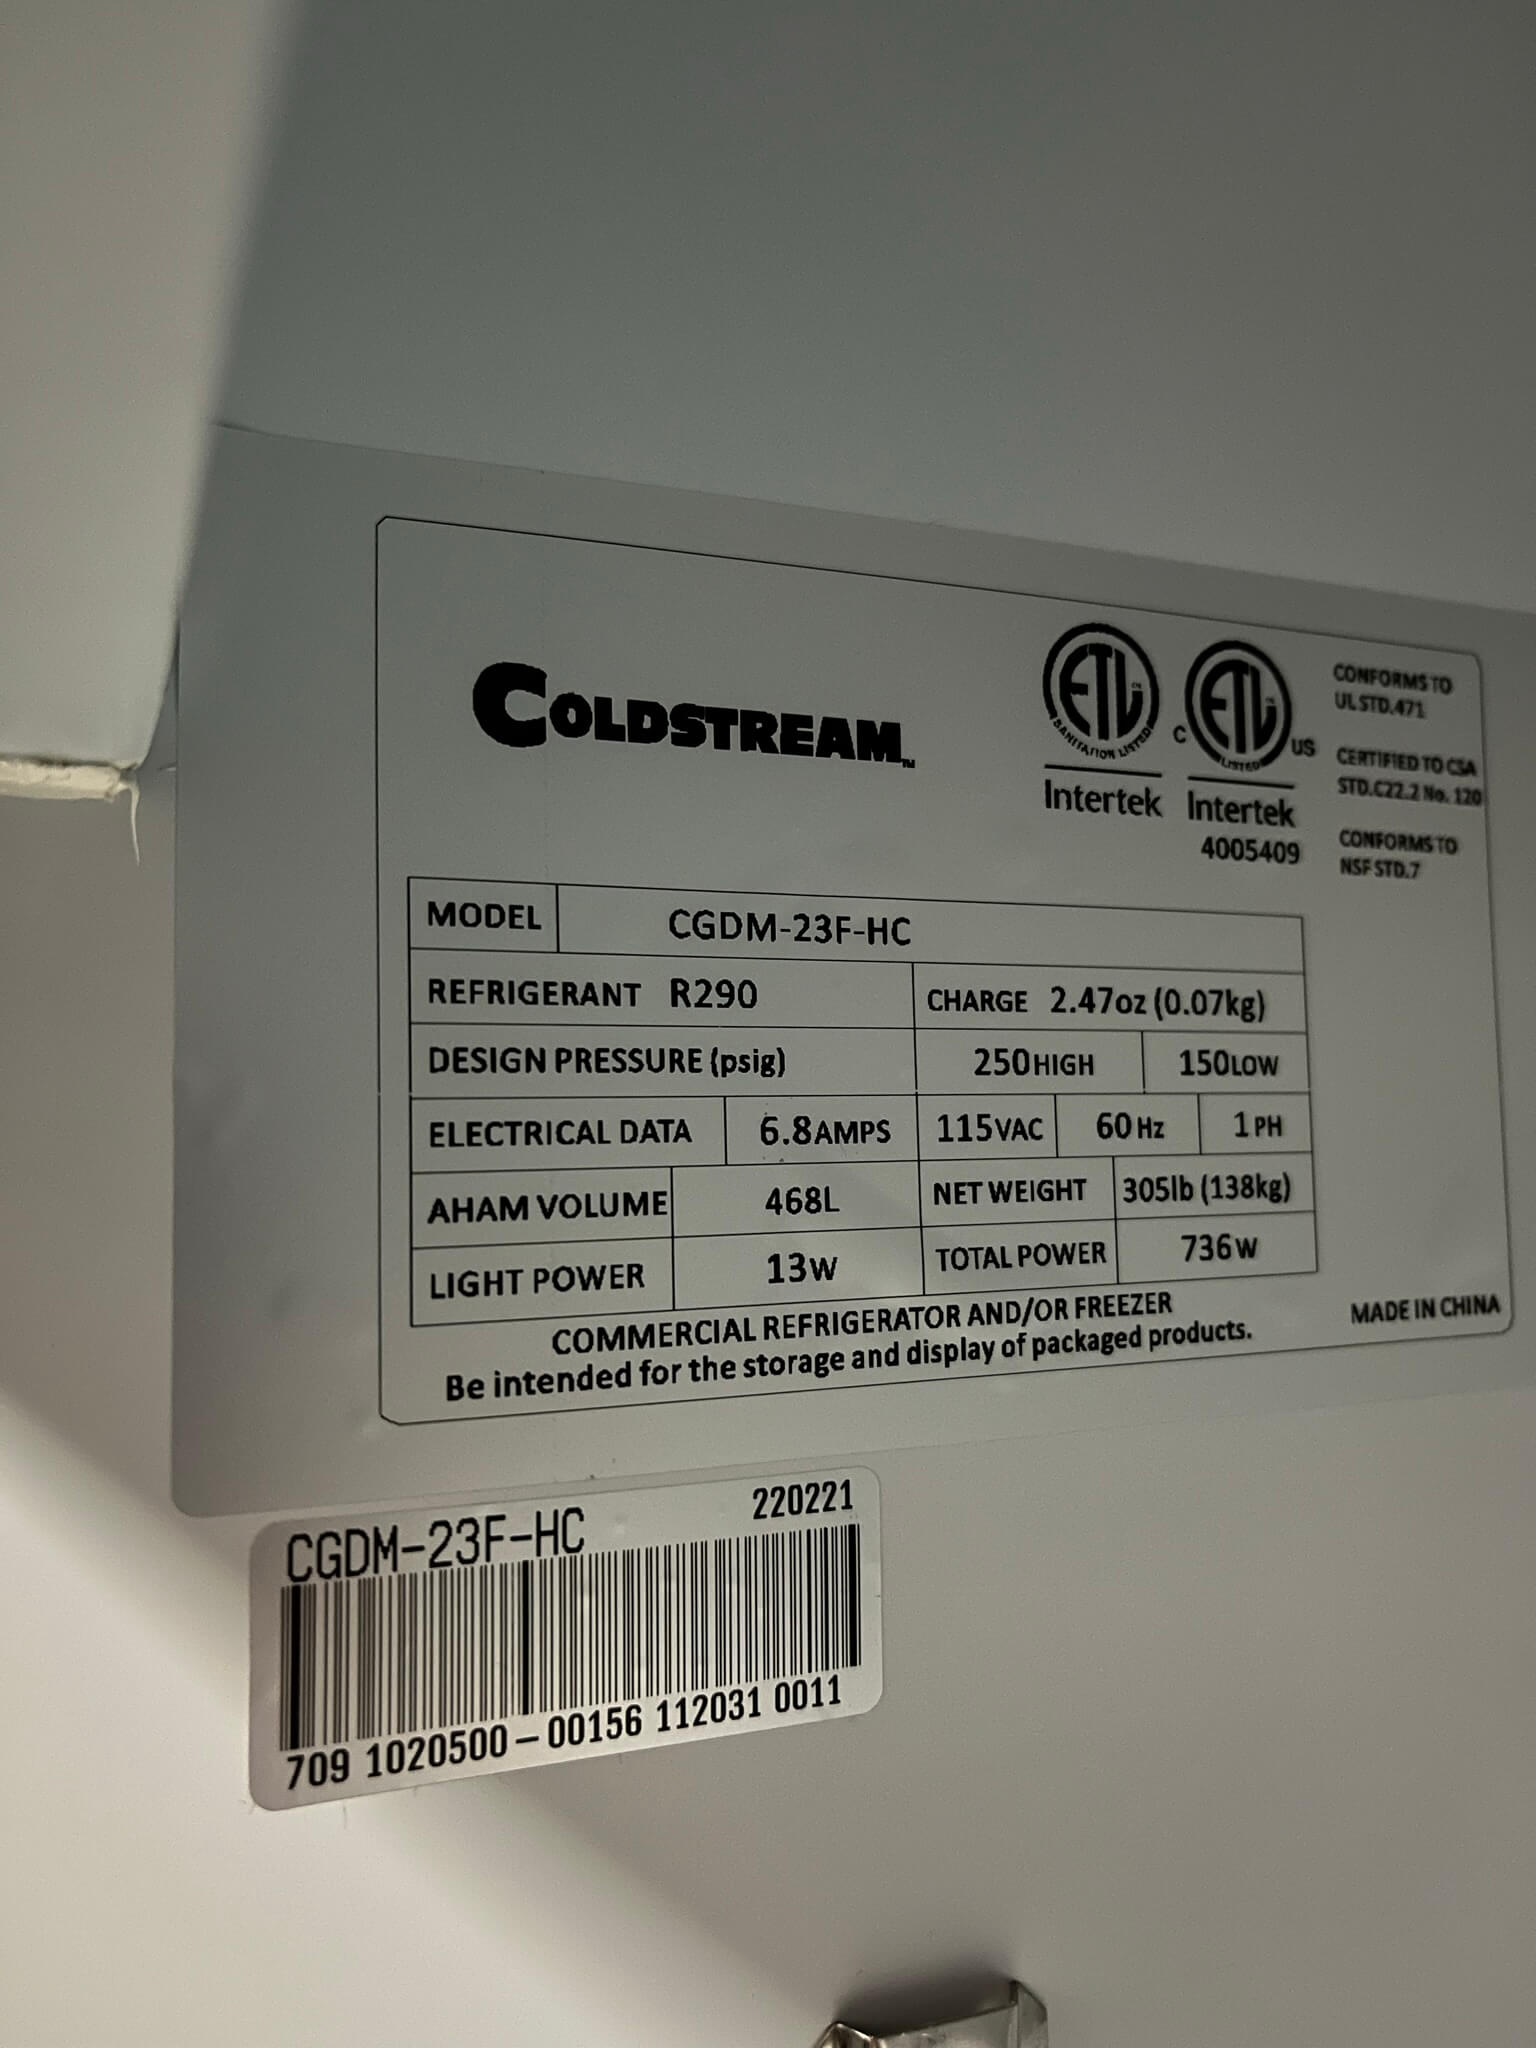 Thumbnail - Coldsteam CGDM-23F-HC Freezer